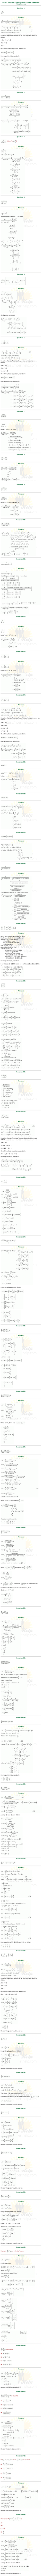 Integrate 1/x^1/2+x^1/3, Integration NCERT Miscellaneous Question 5